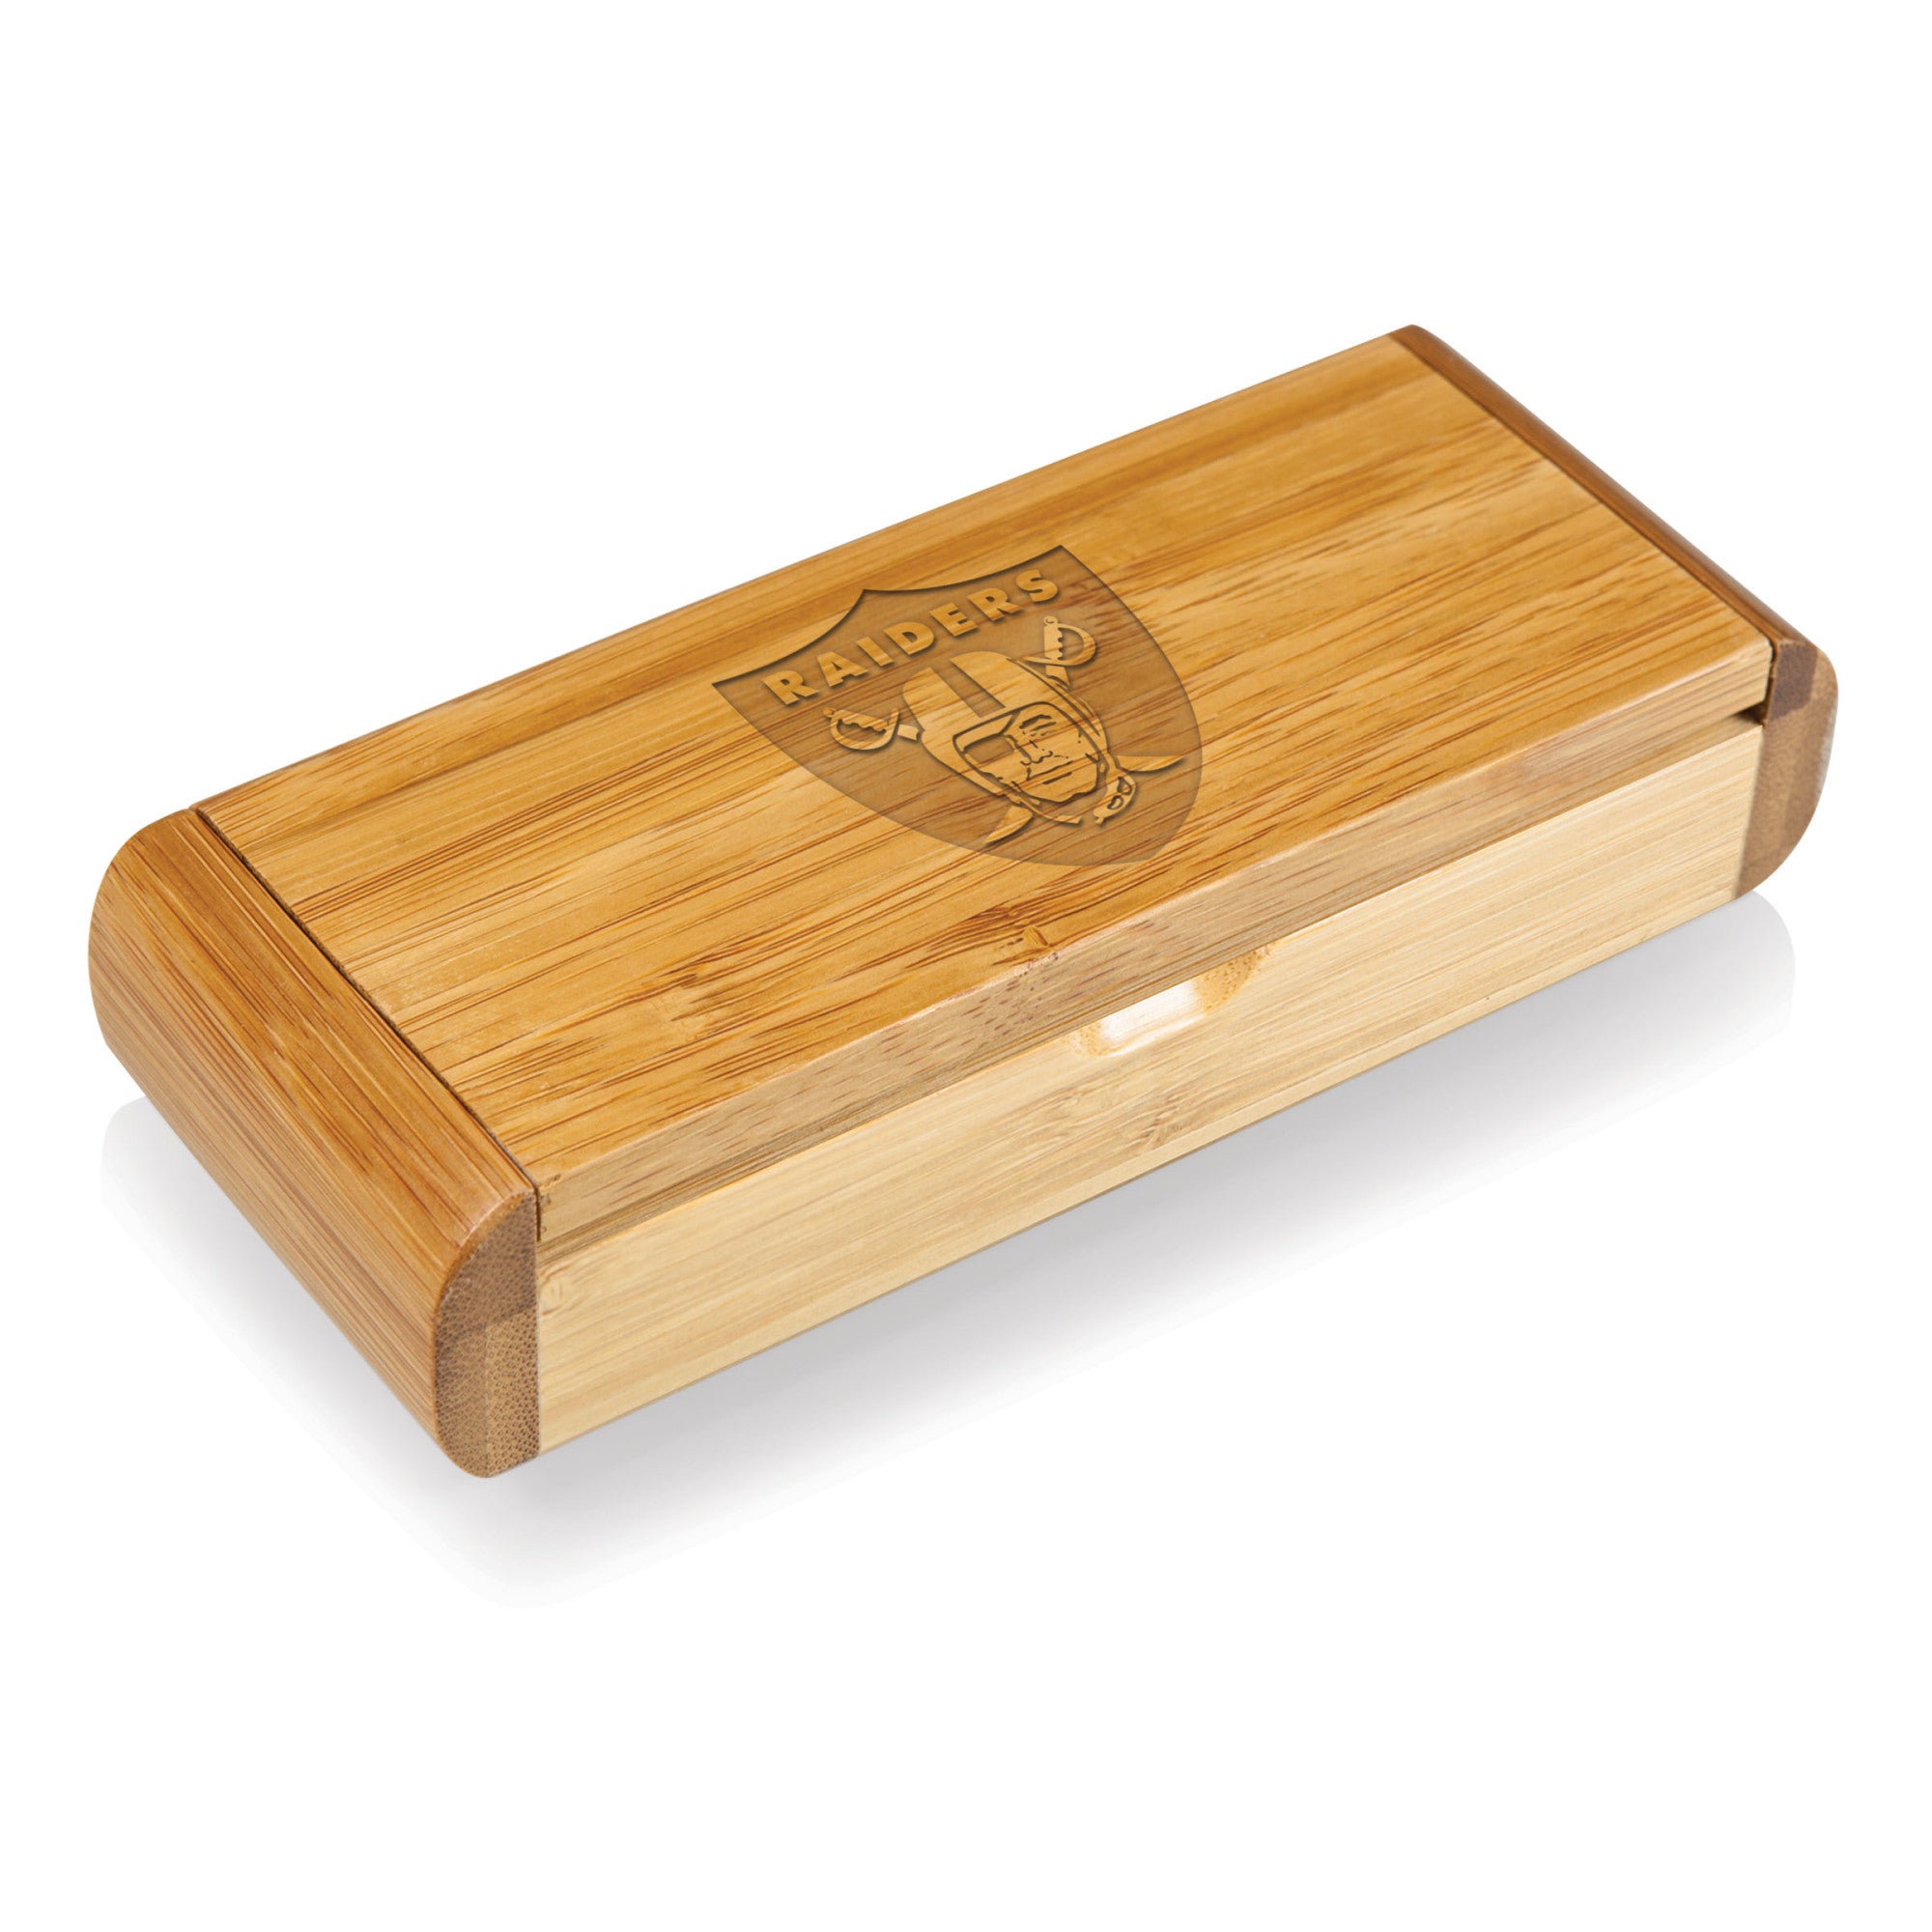 Las Vegas Raiders - Elan Deluxe Corkscrew In Bamboo Box